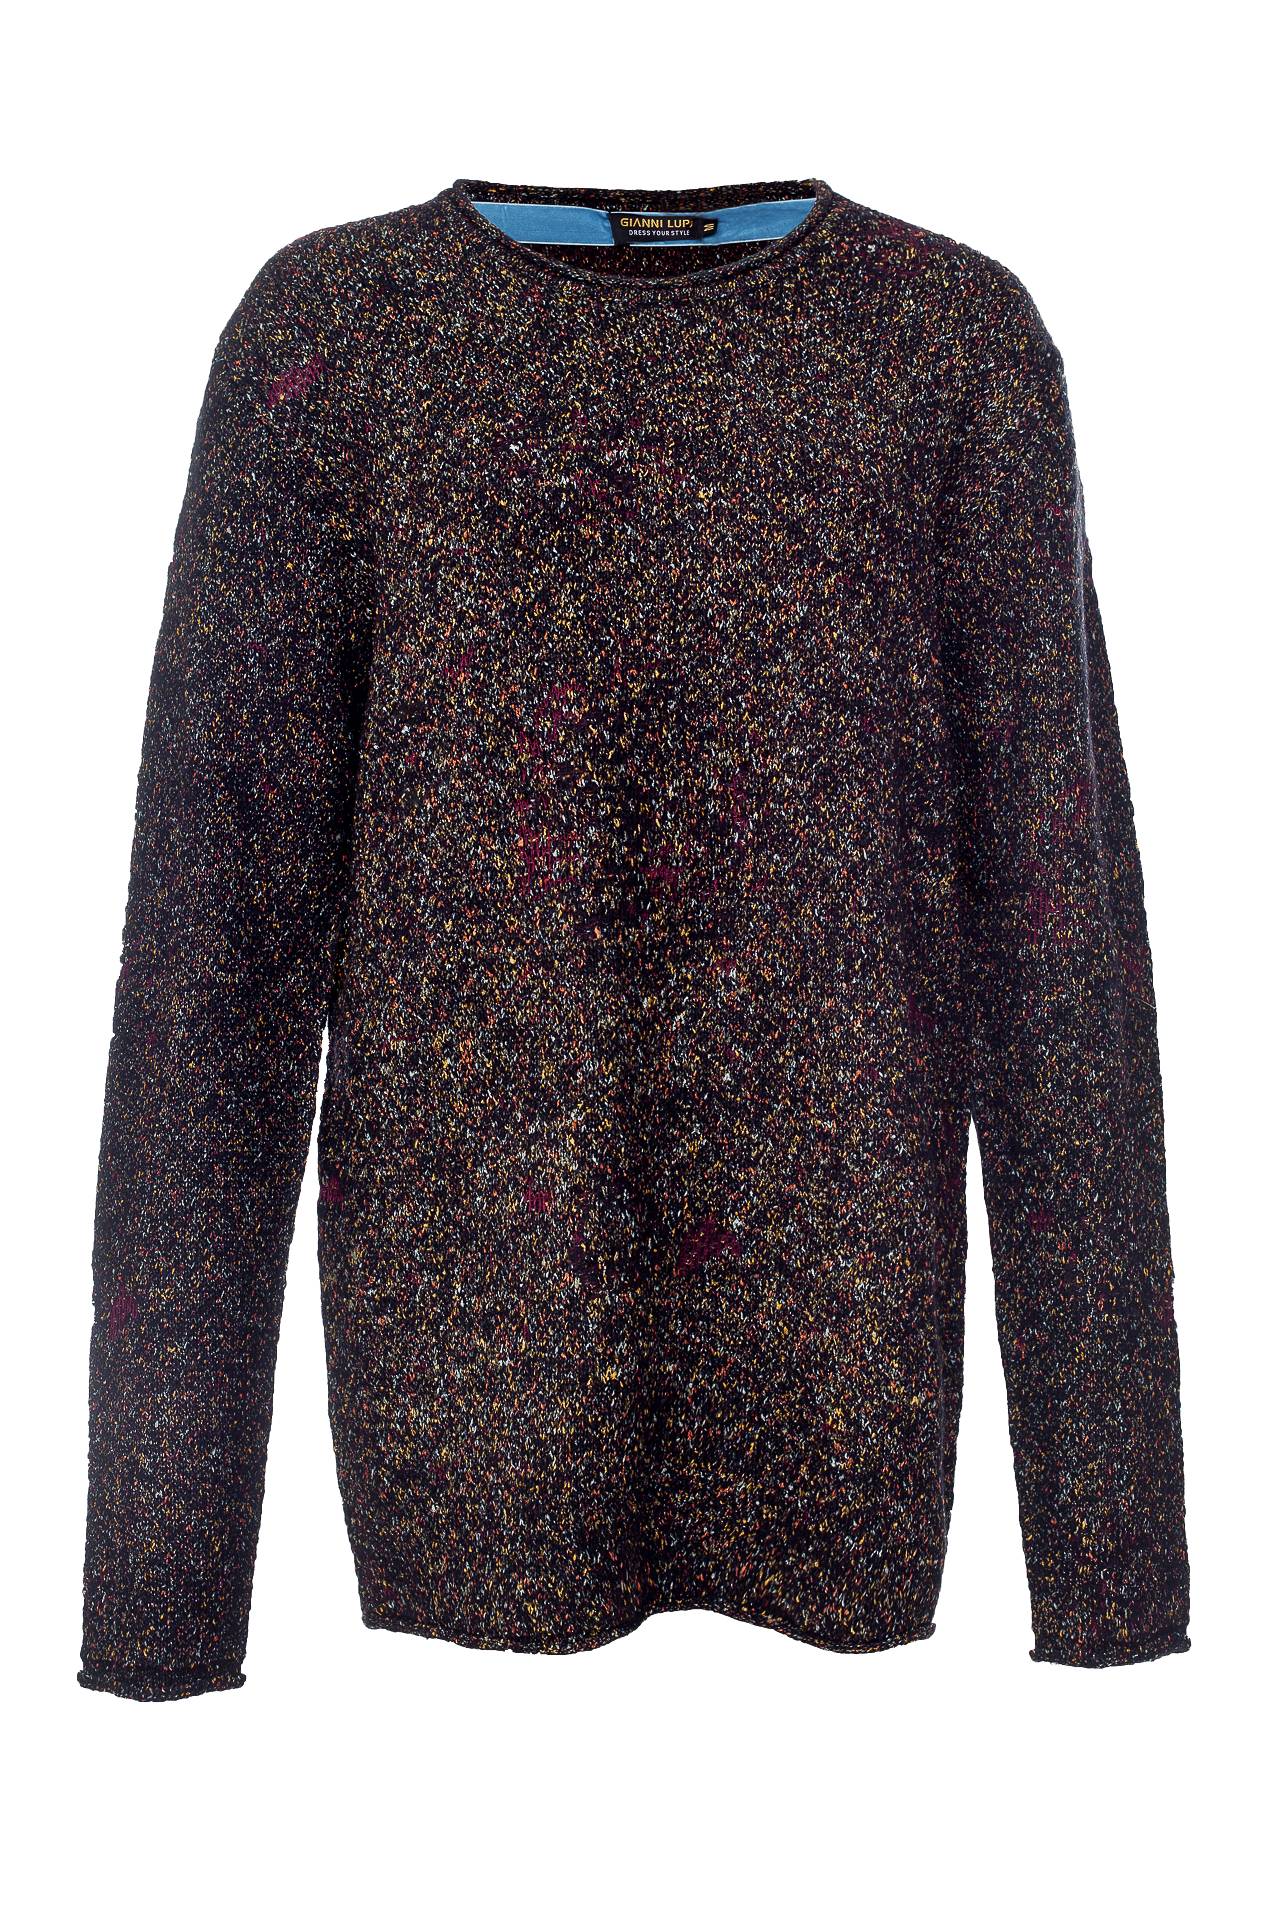 Одежда мужская Джемпер GIANNI LUPO (GL31911/17.1). Купить за 4130 руб.